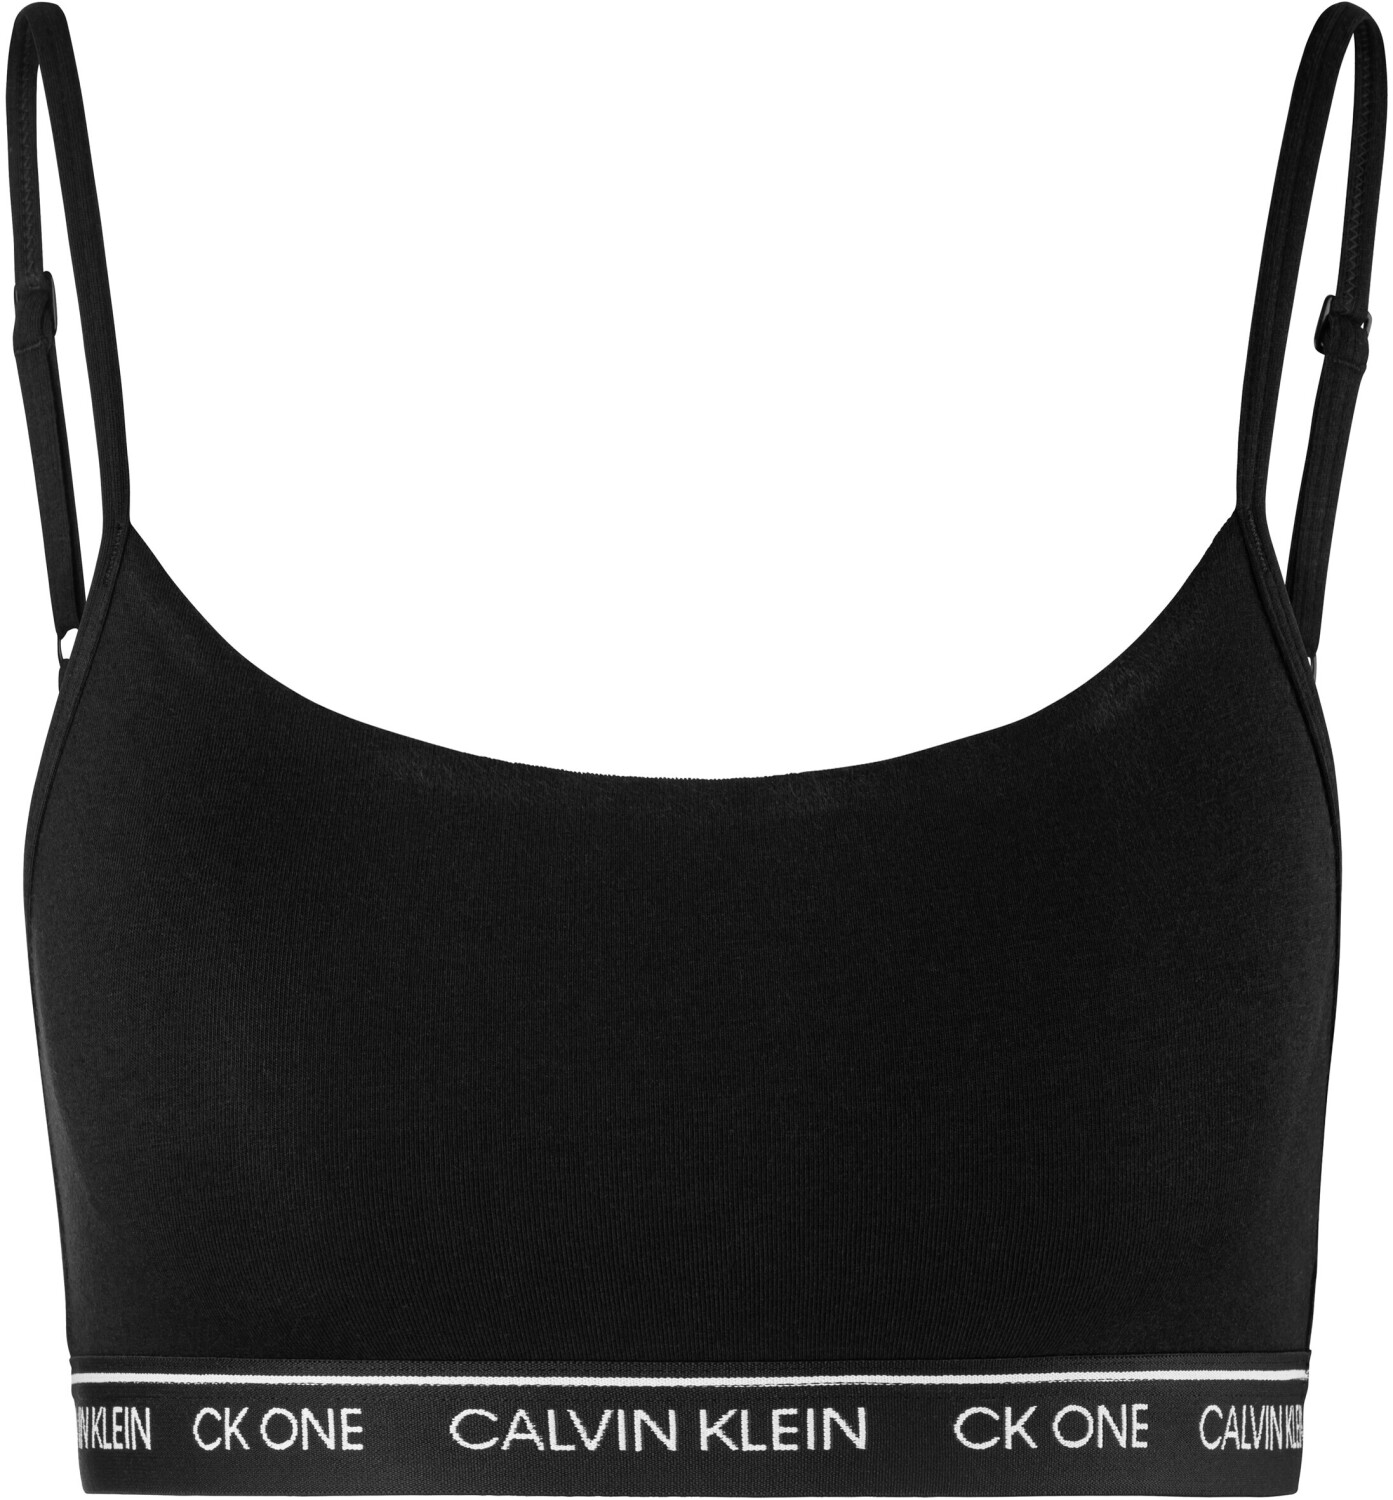 Buy Calvin Klein String-Bralette - CK One from £10.50 (Today) – Best Deals  on